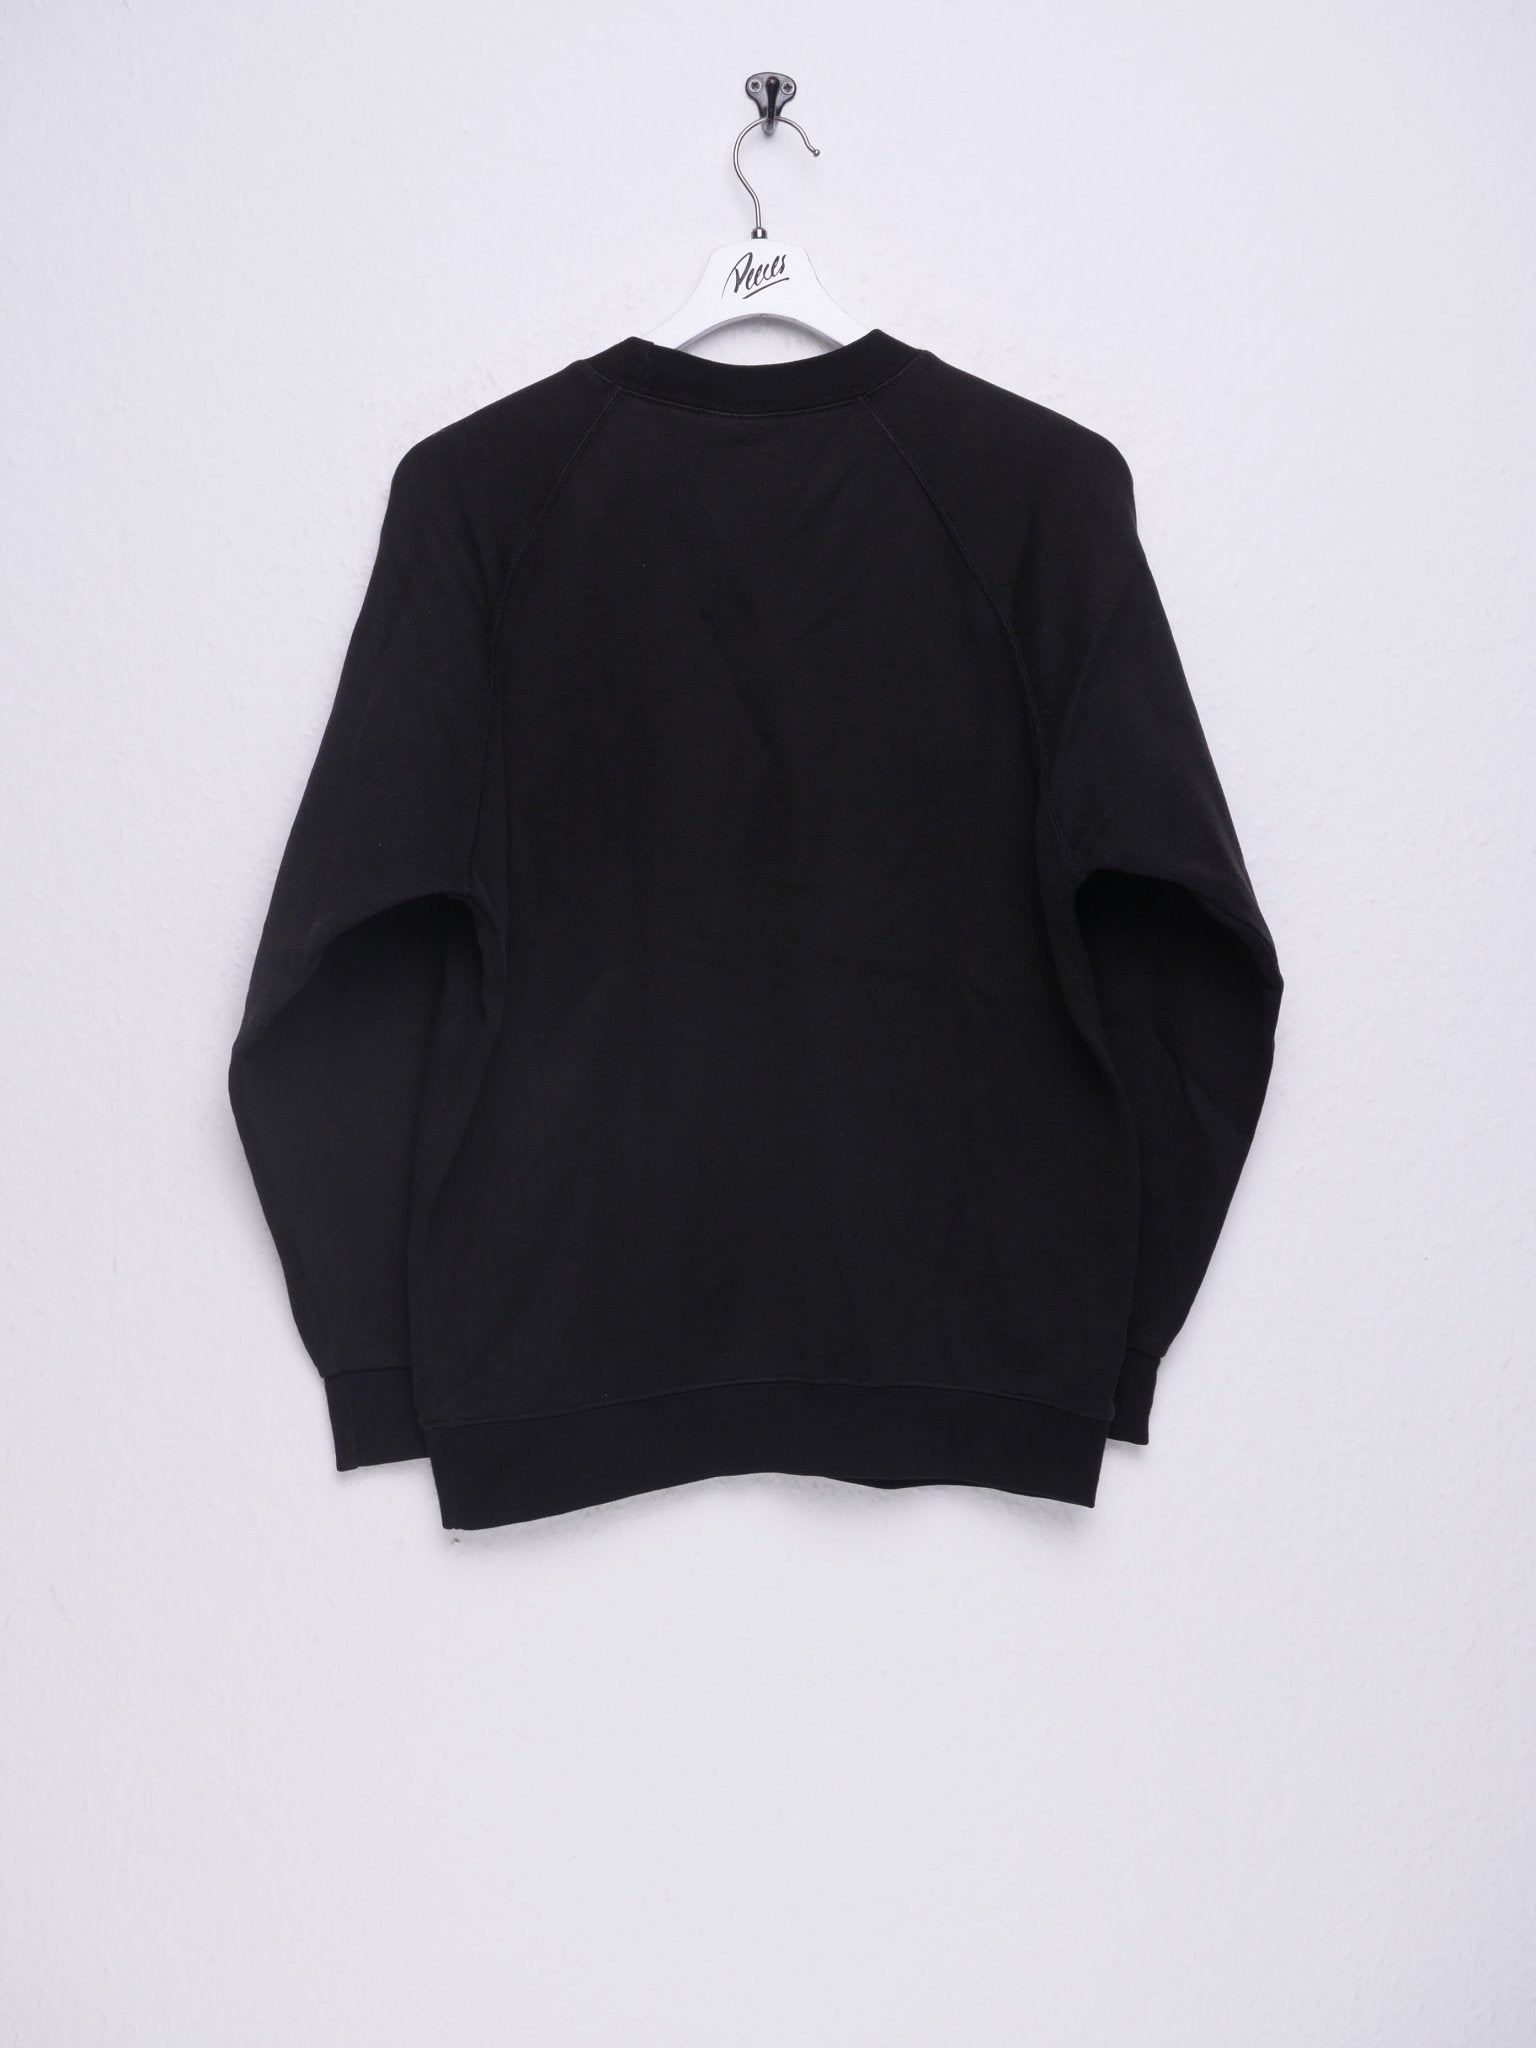 QPCS embroidered Logo black Sweater - Peeces